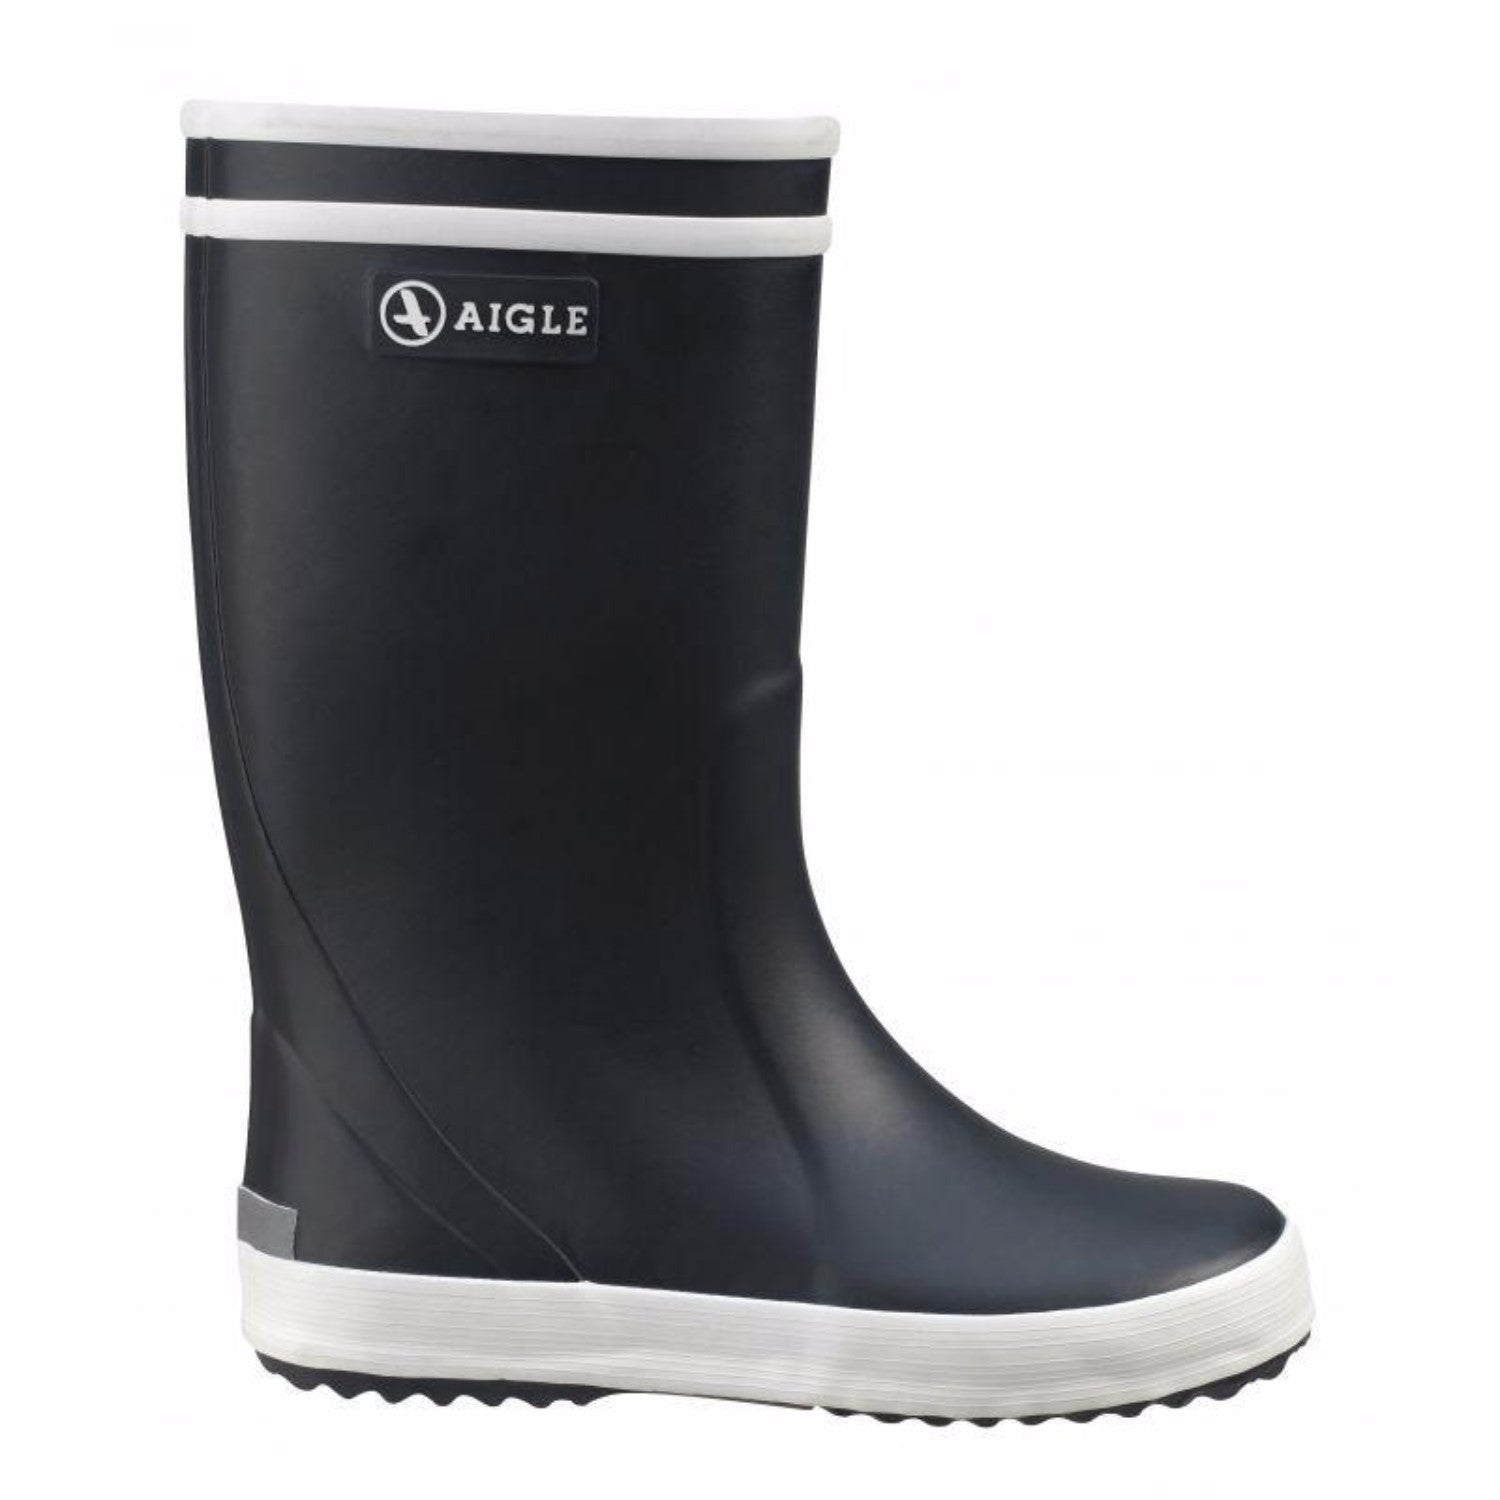 aigle rain boots kids